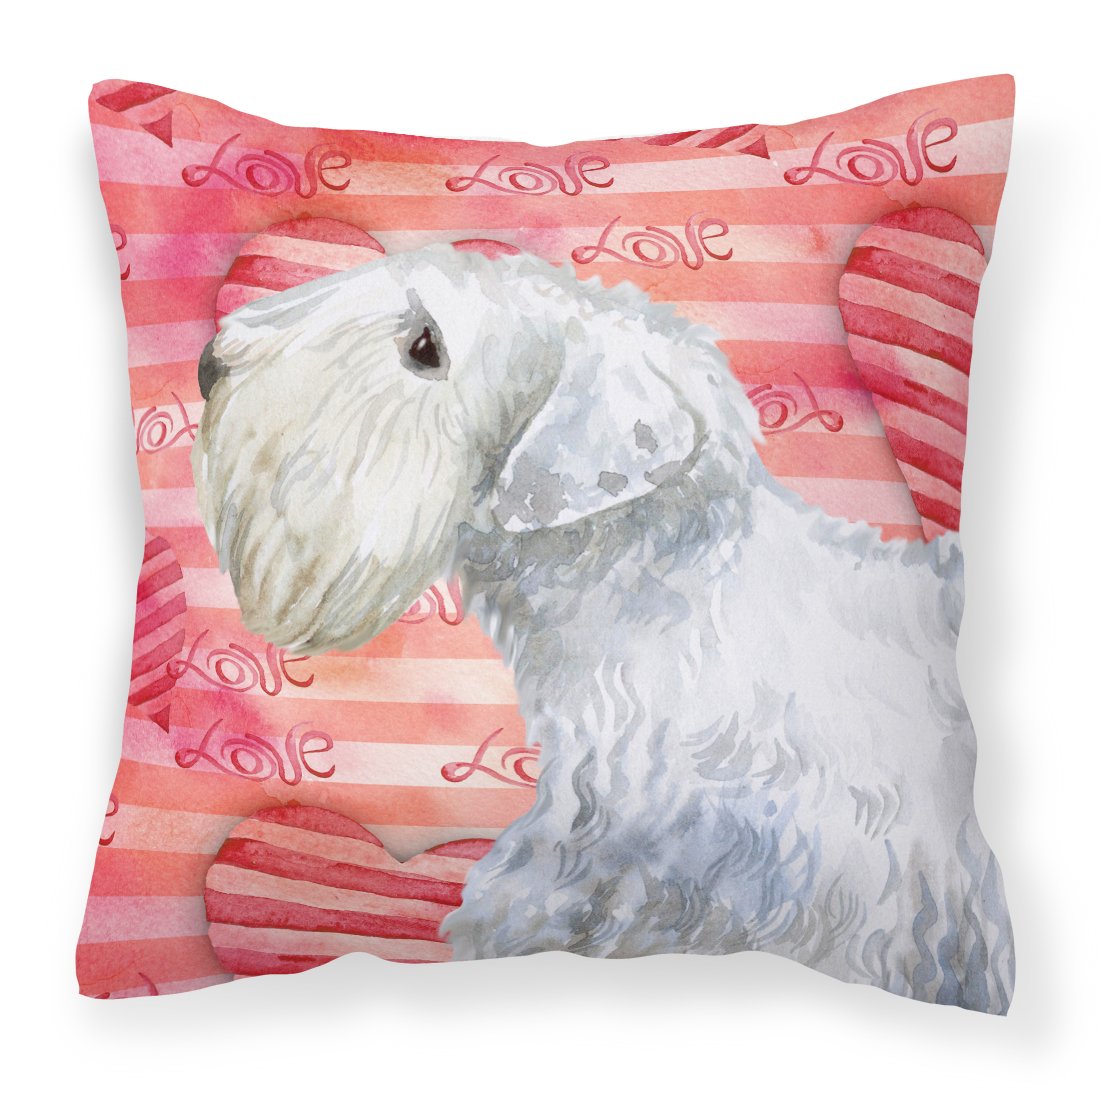 Sealyham Terrier Love Fabric Decorative Pillow BB9771PW1818 by Caroline's Treasures